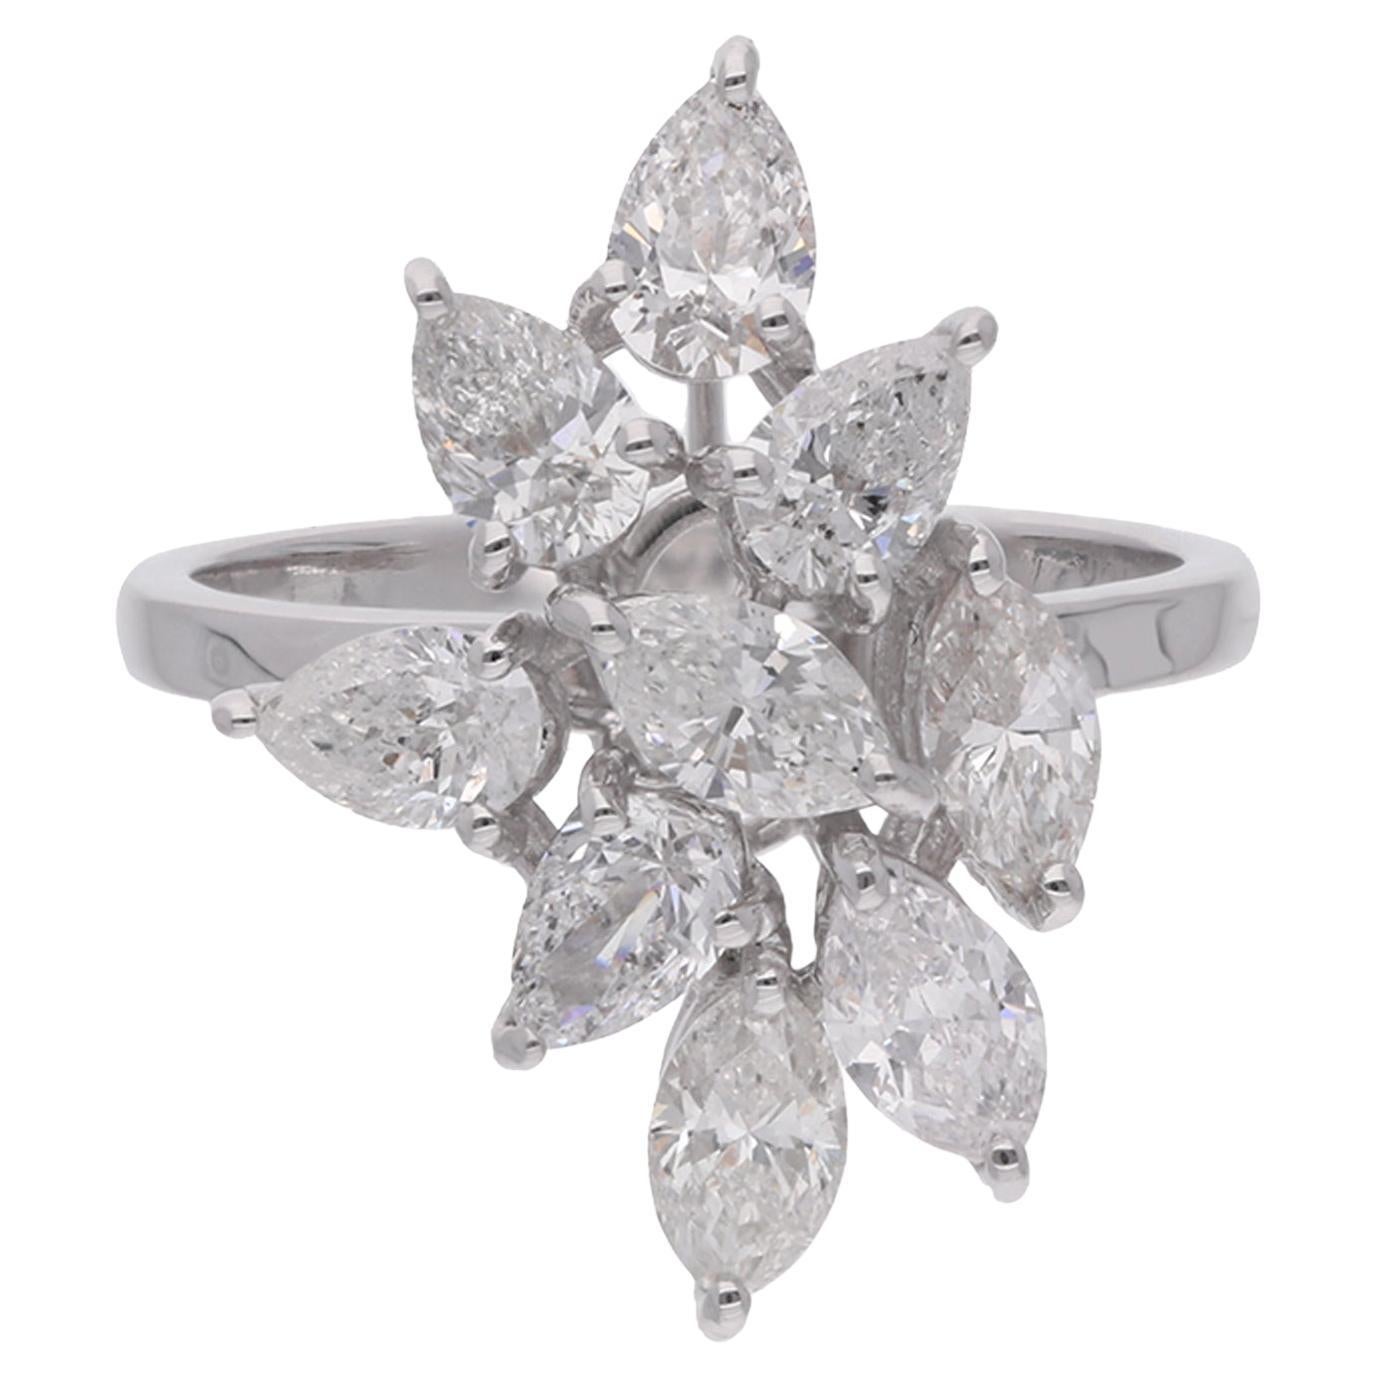 2.31 Carat Pear Marquise Diamond Ring Solid 18 Karat White Gold Handmade Jewelry